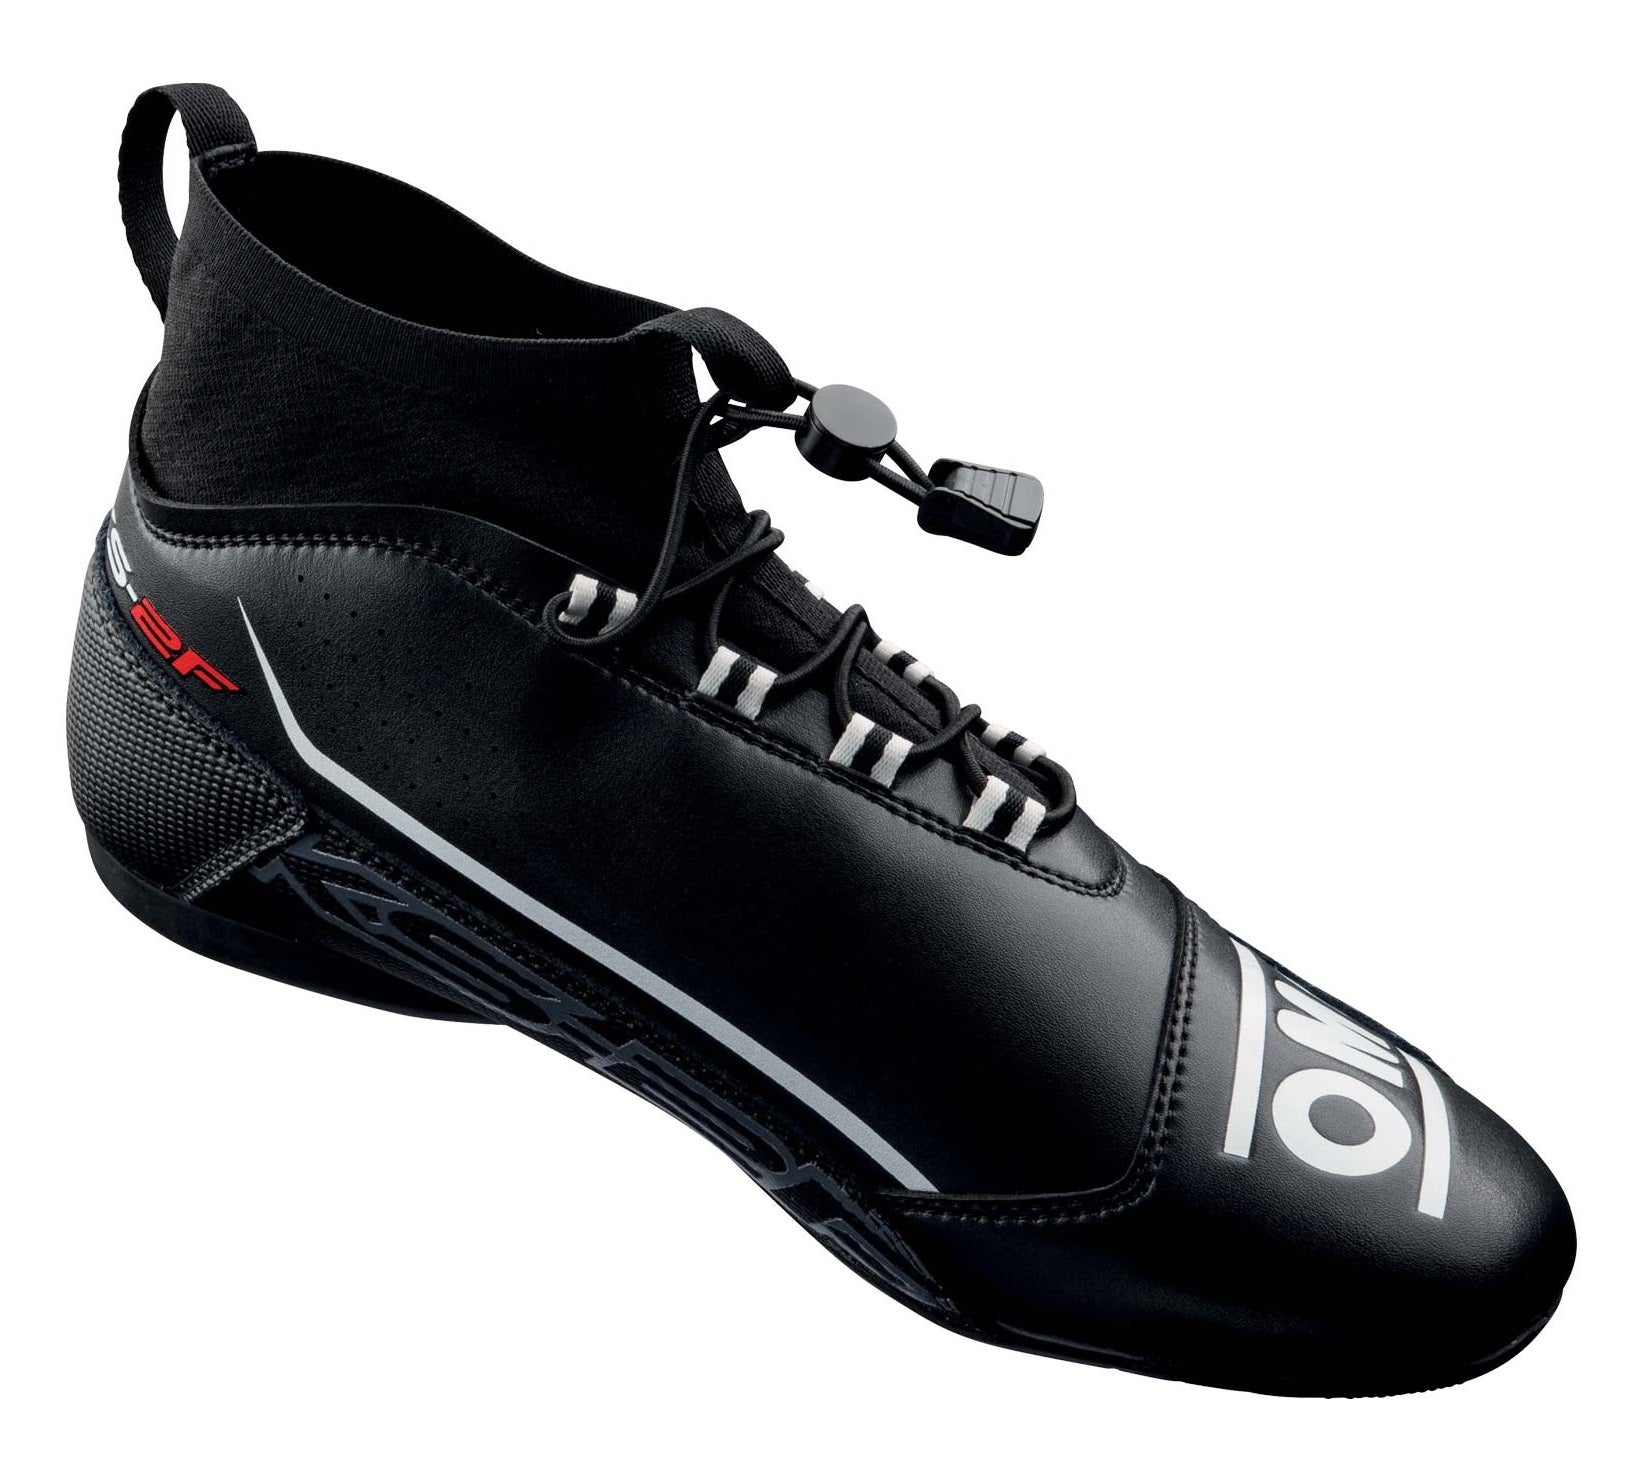 OMP KC0-0830-A01-071-47 KS-2F Karting shoes, black, size 47 Photo-1 